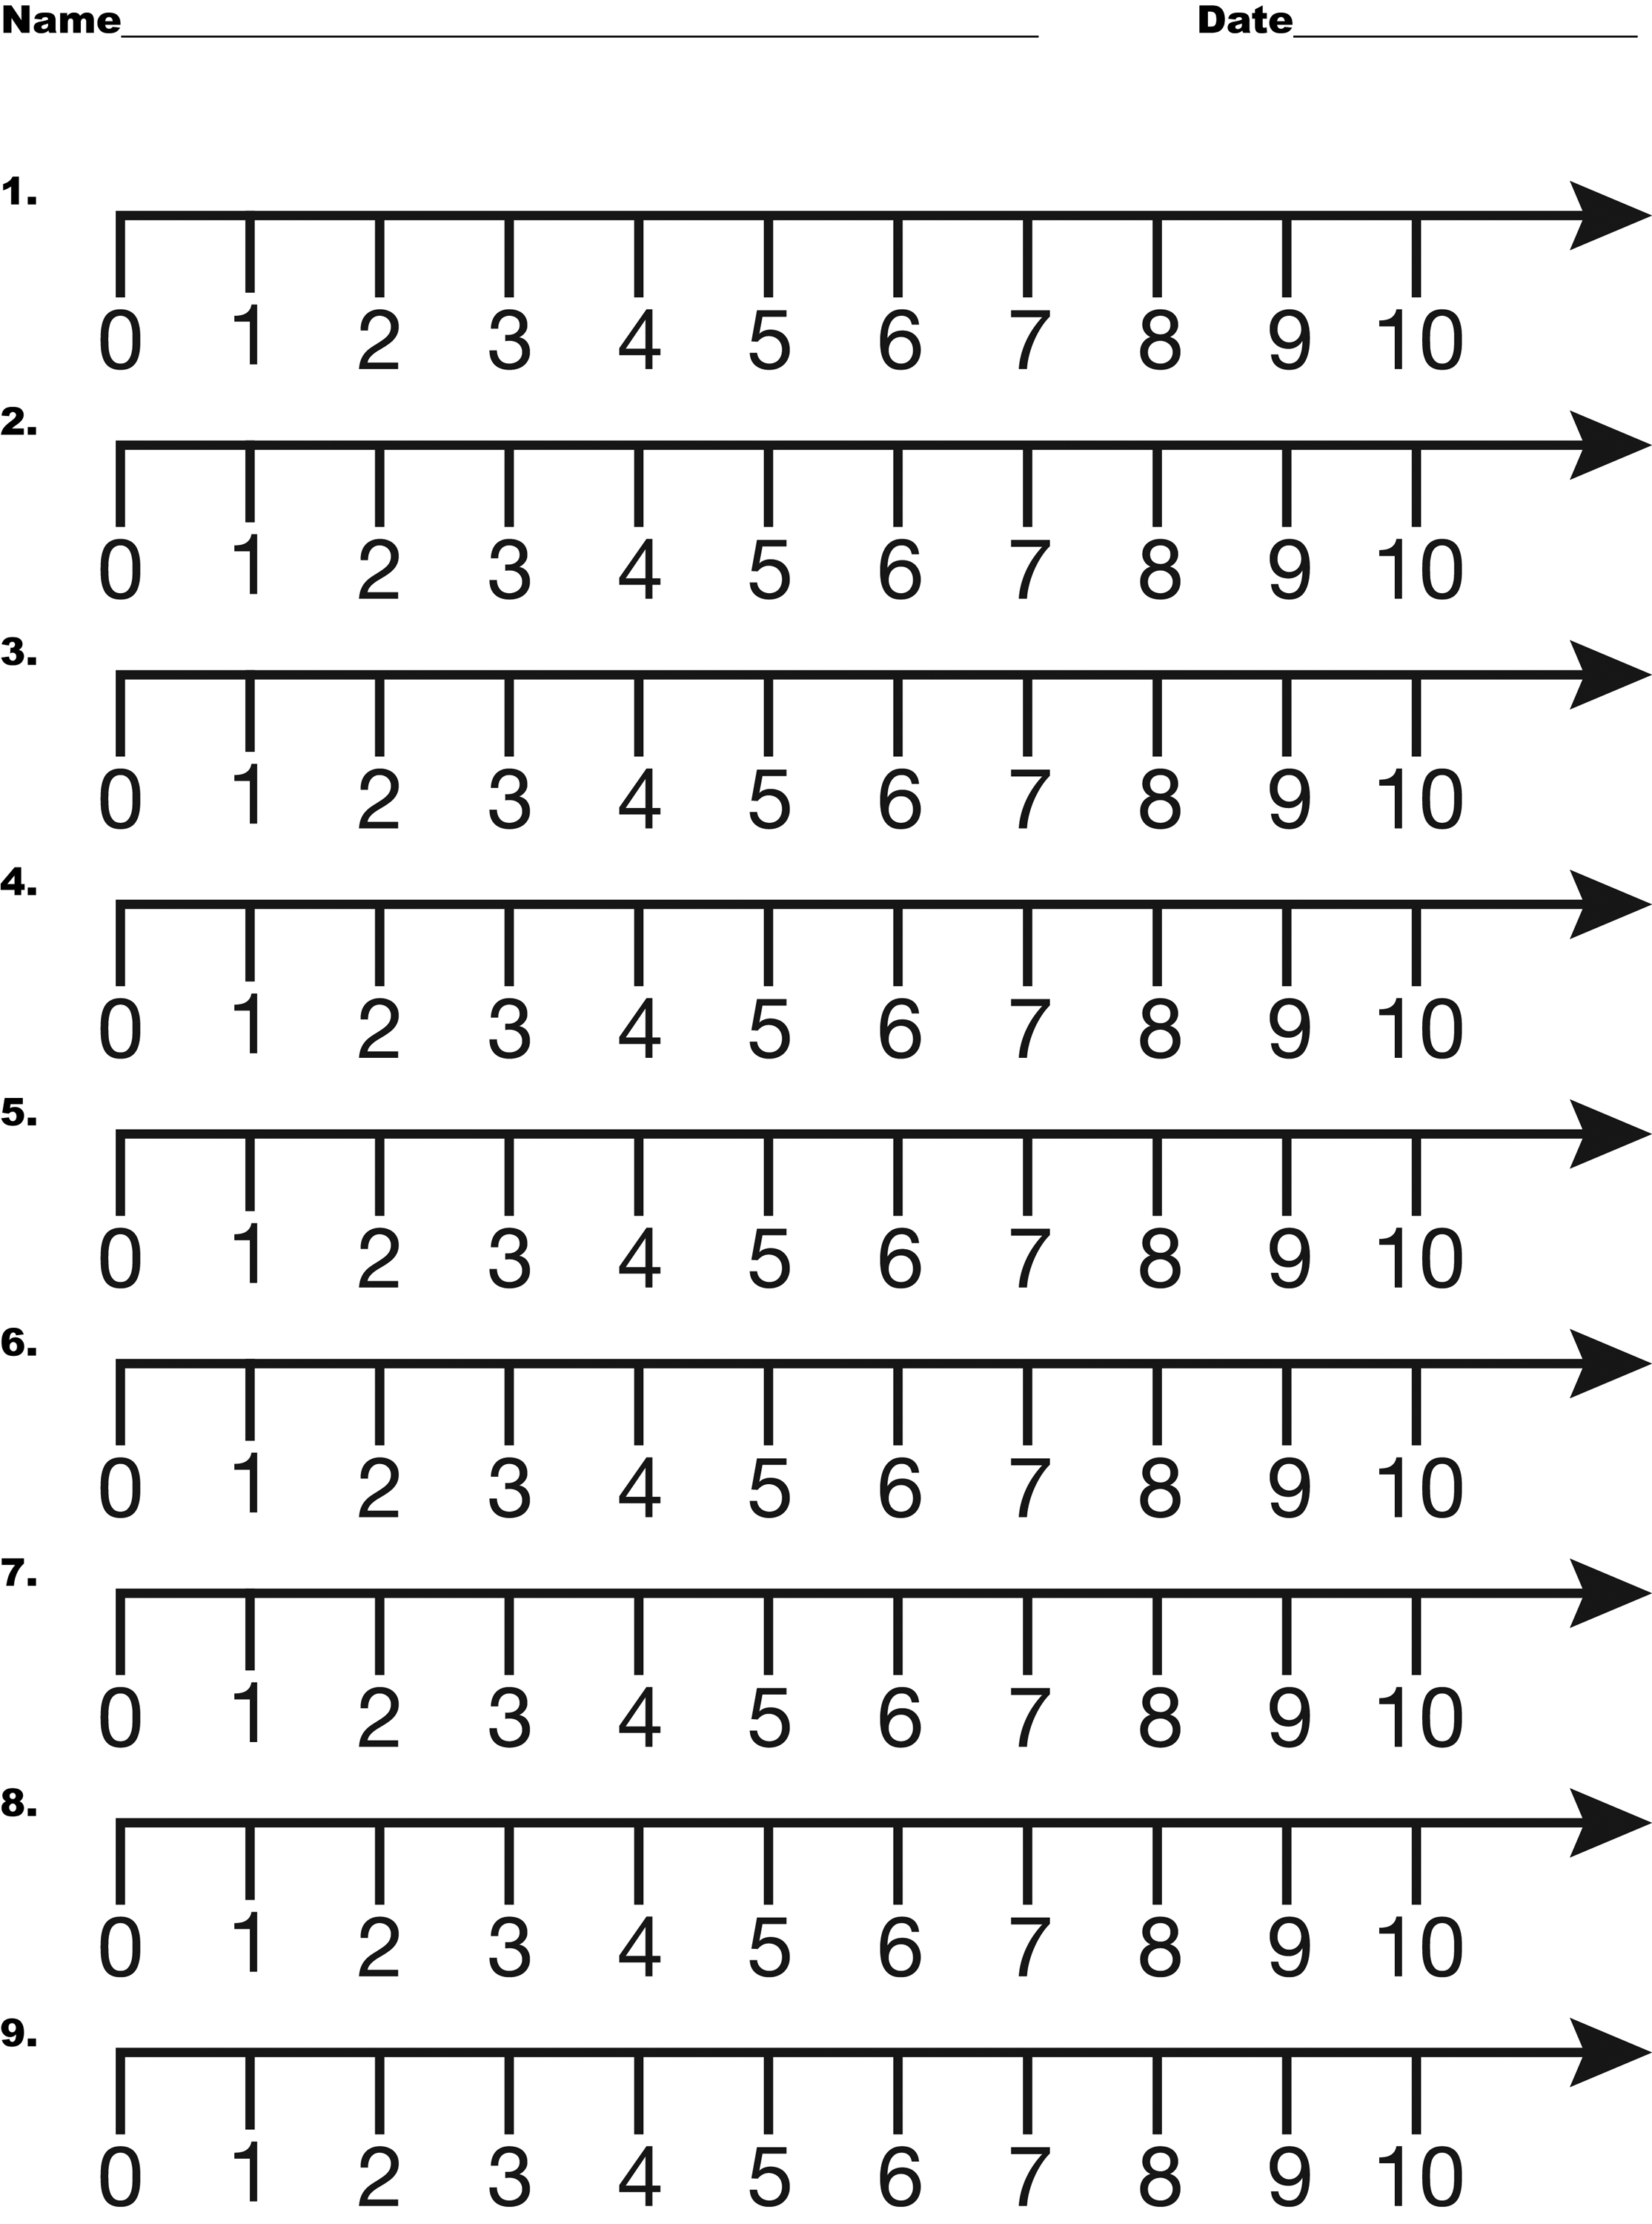 Number Line, 0-10 | ClipArt ETC